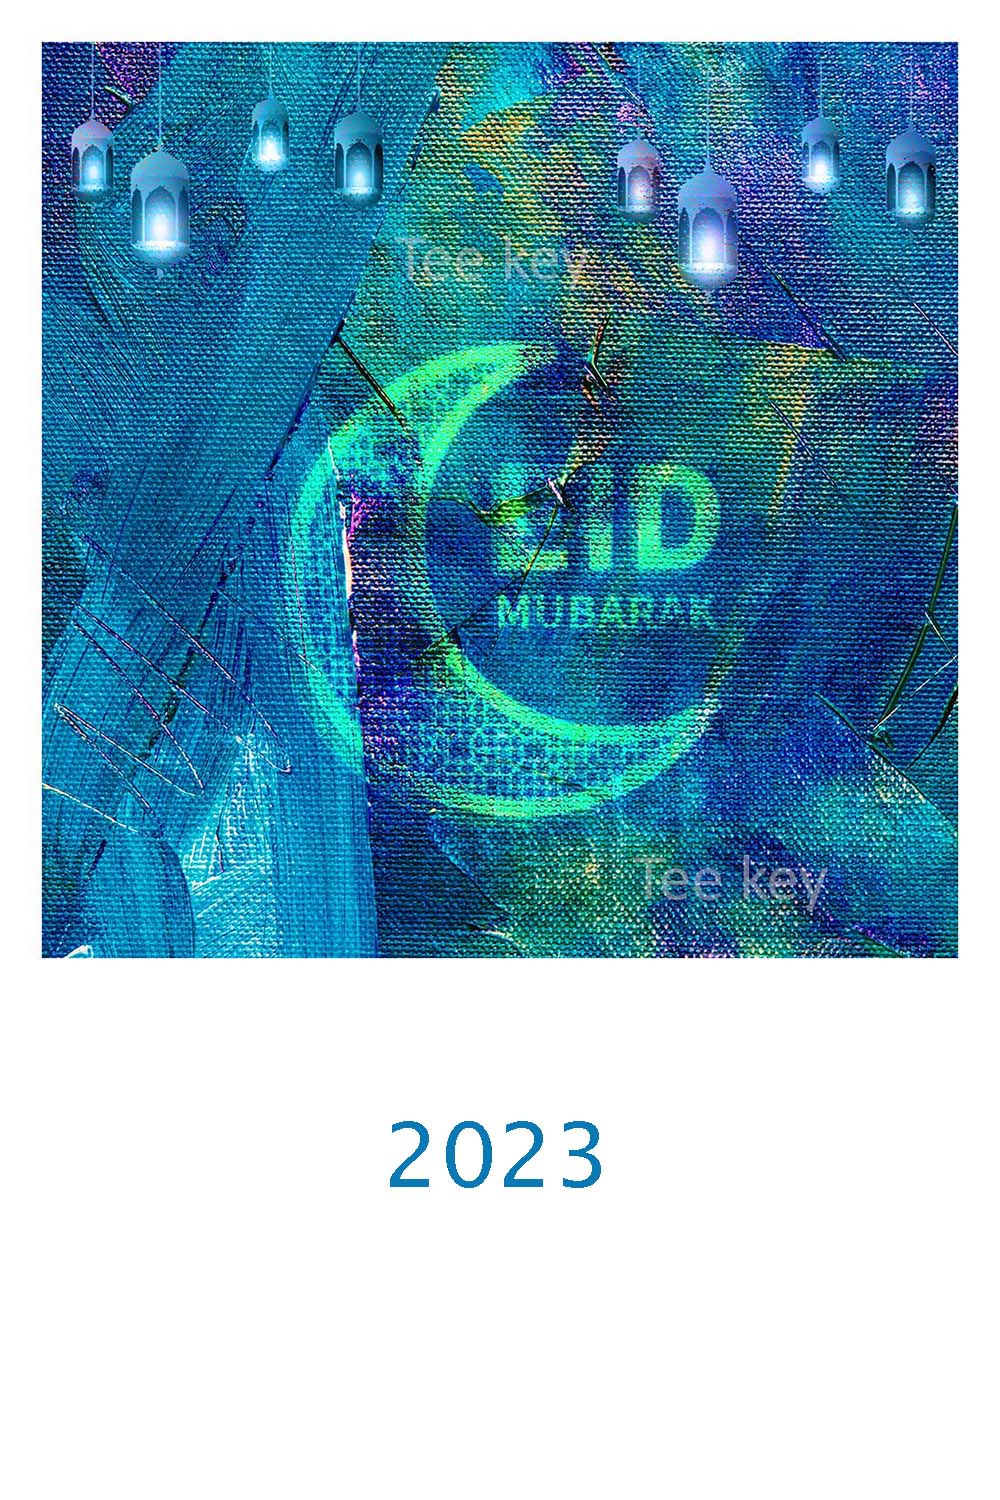 Eid Mubarak 2023 pinterest preview image.